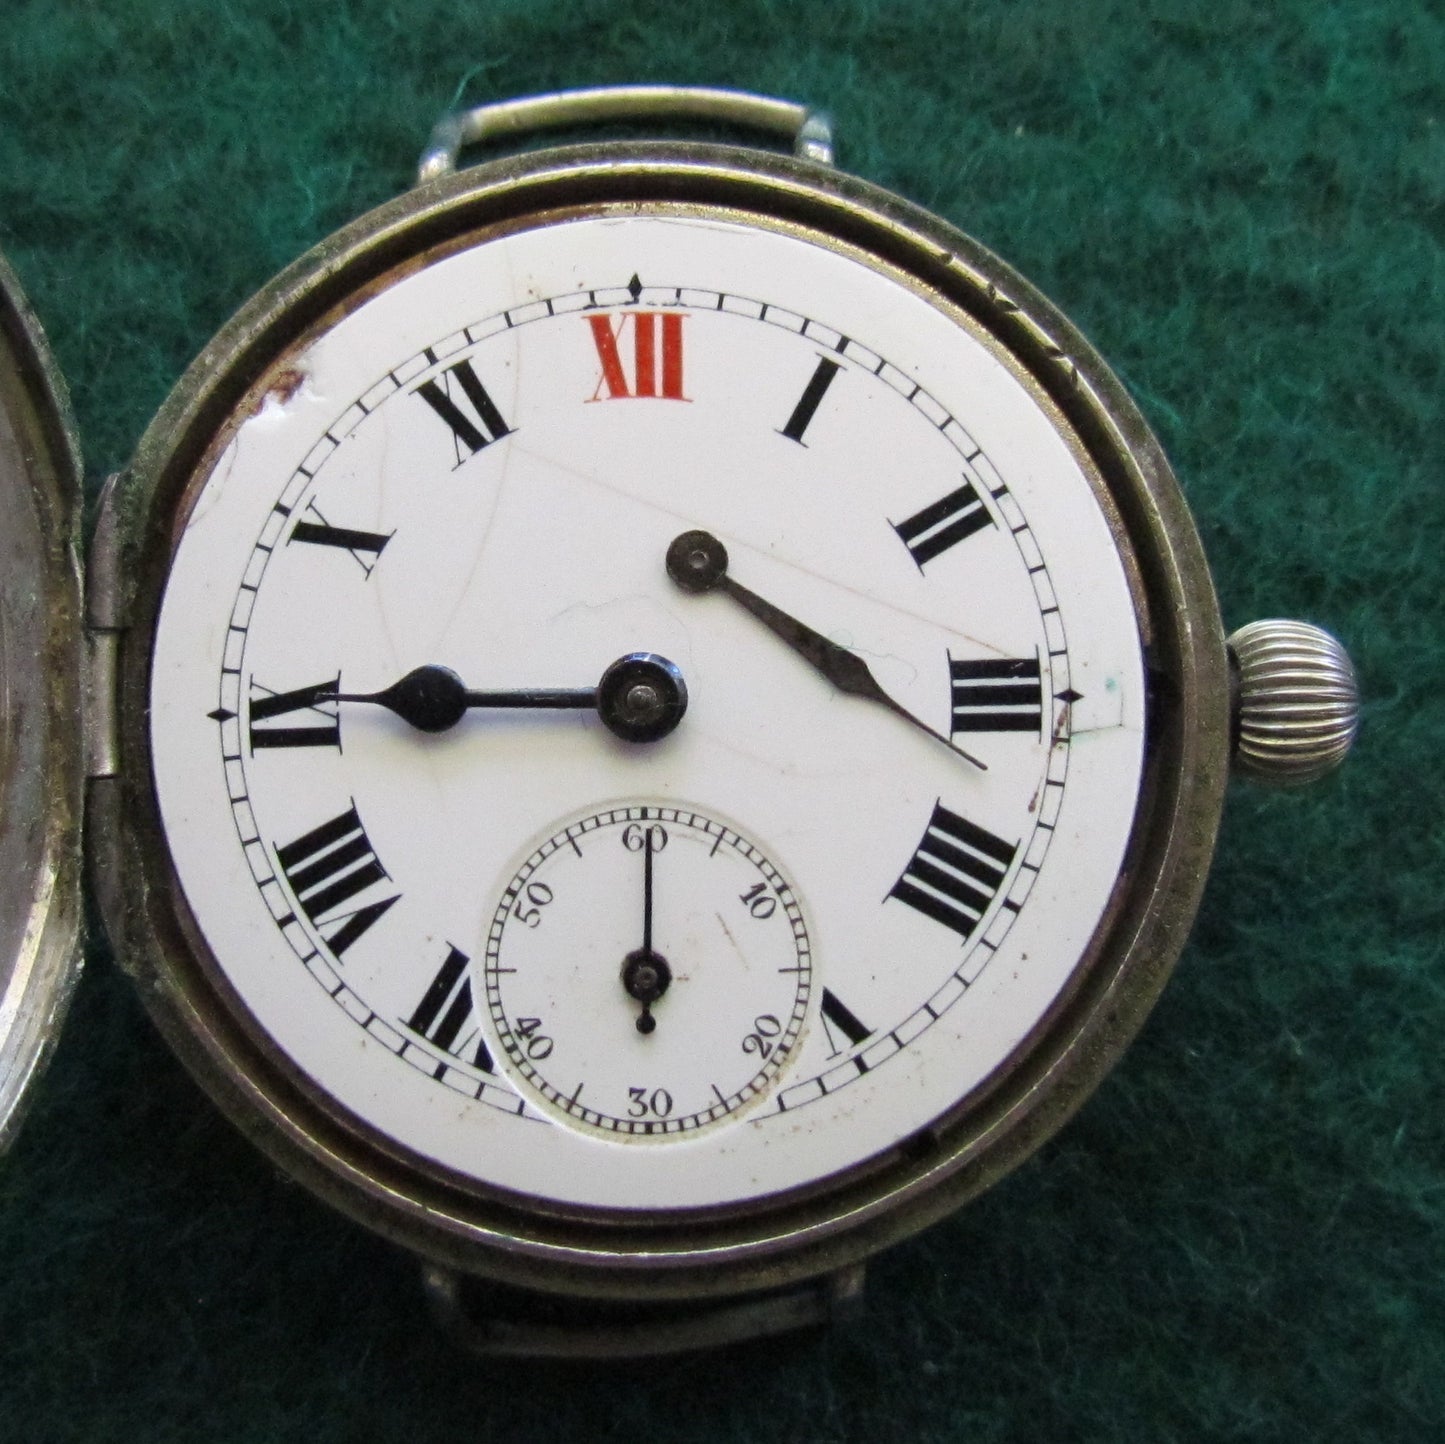 Nickle Plated Swiss Made Wristwatch 33.6mm Case Diameter